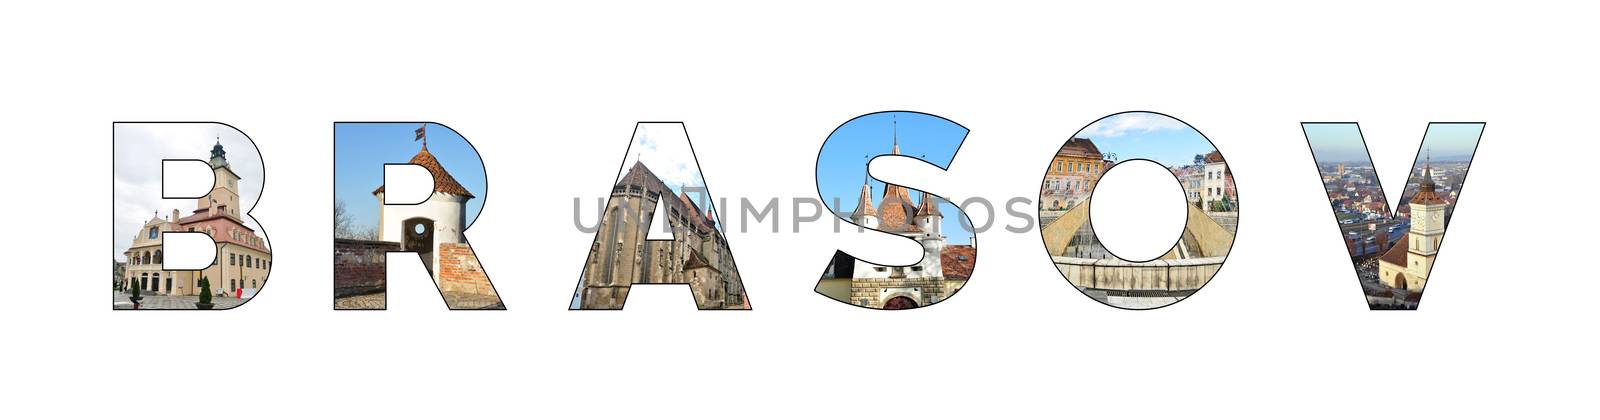 brasov city romania landmarks images inside text